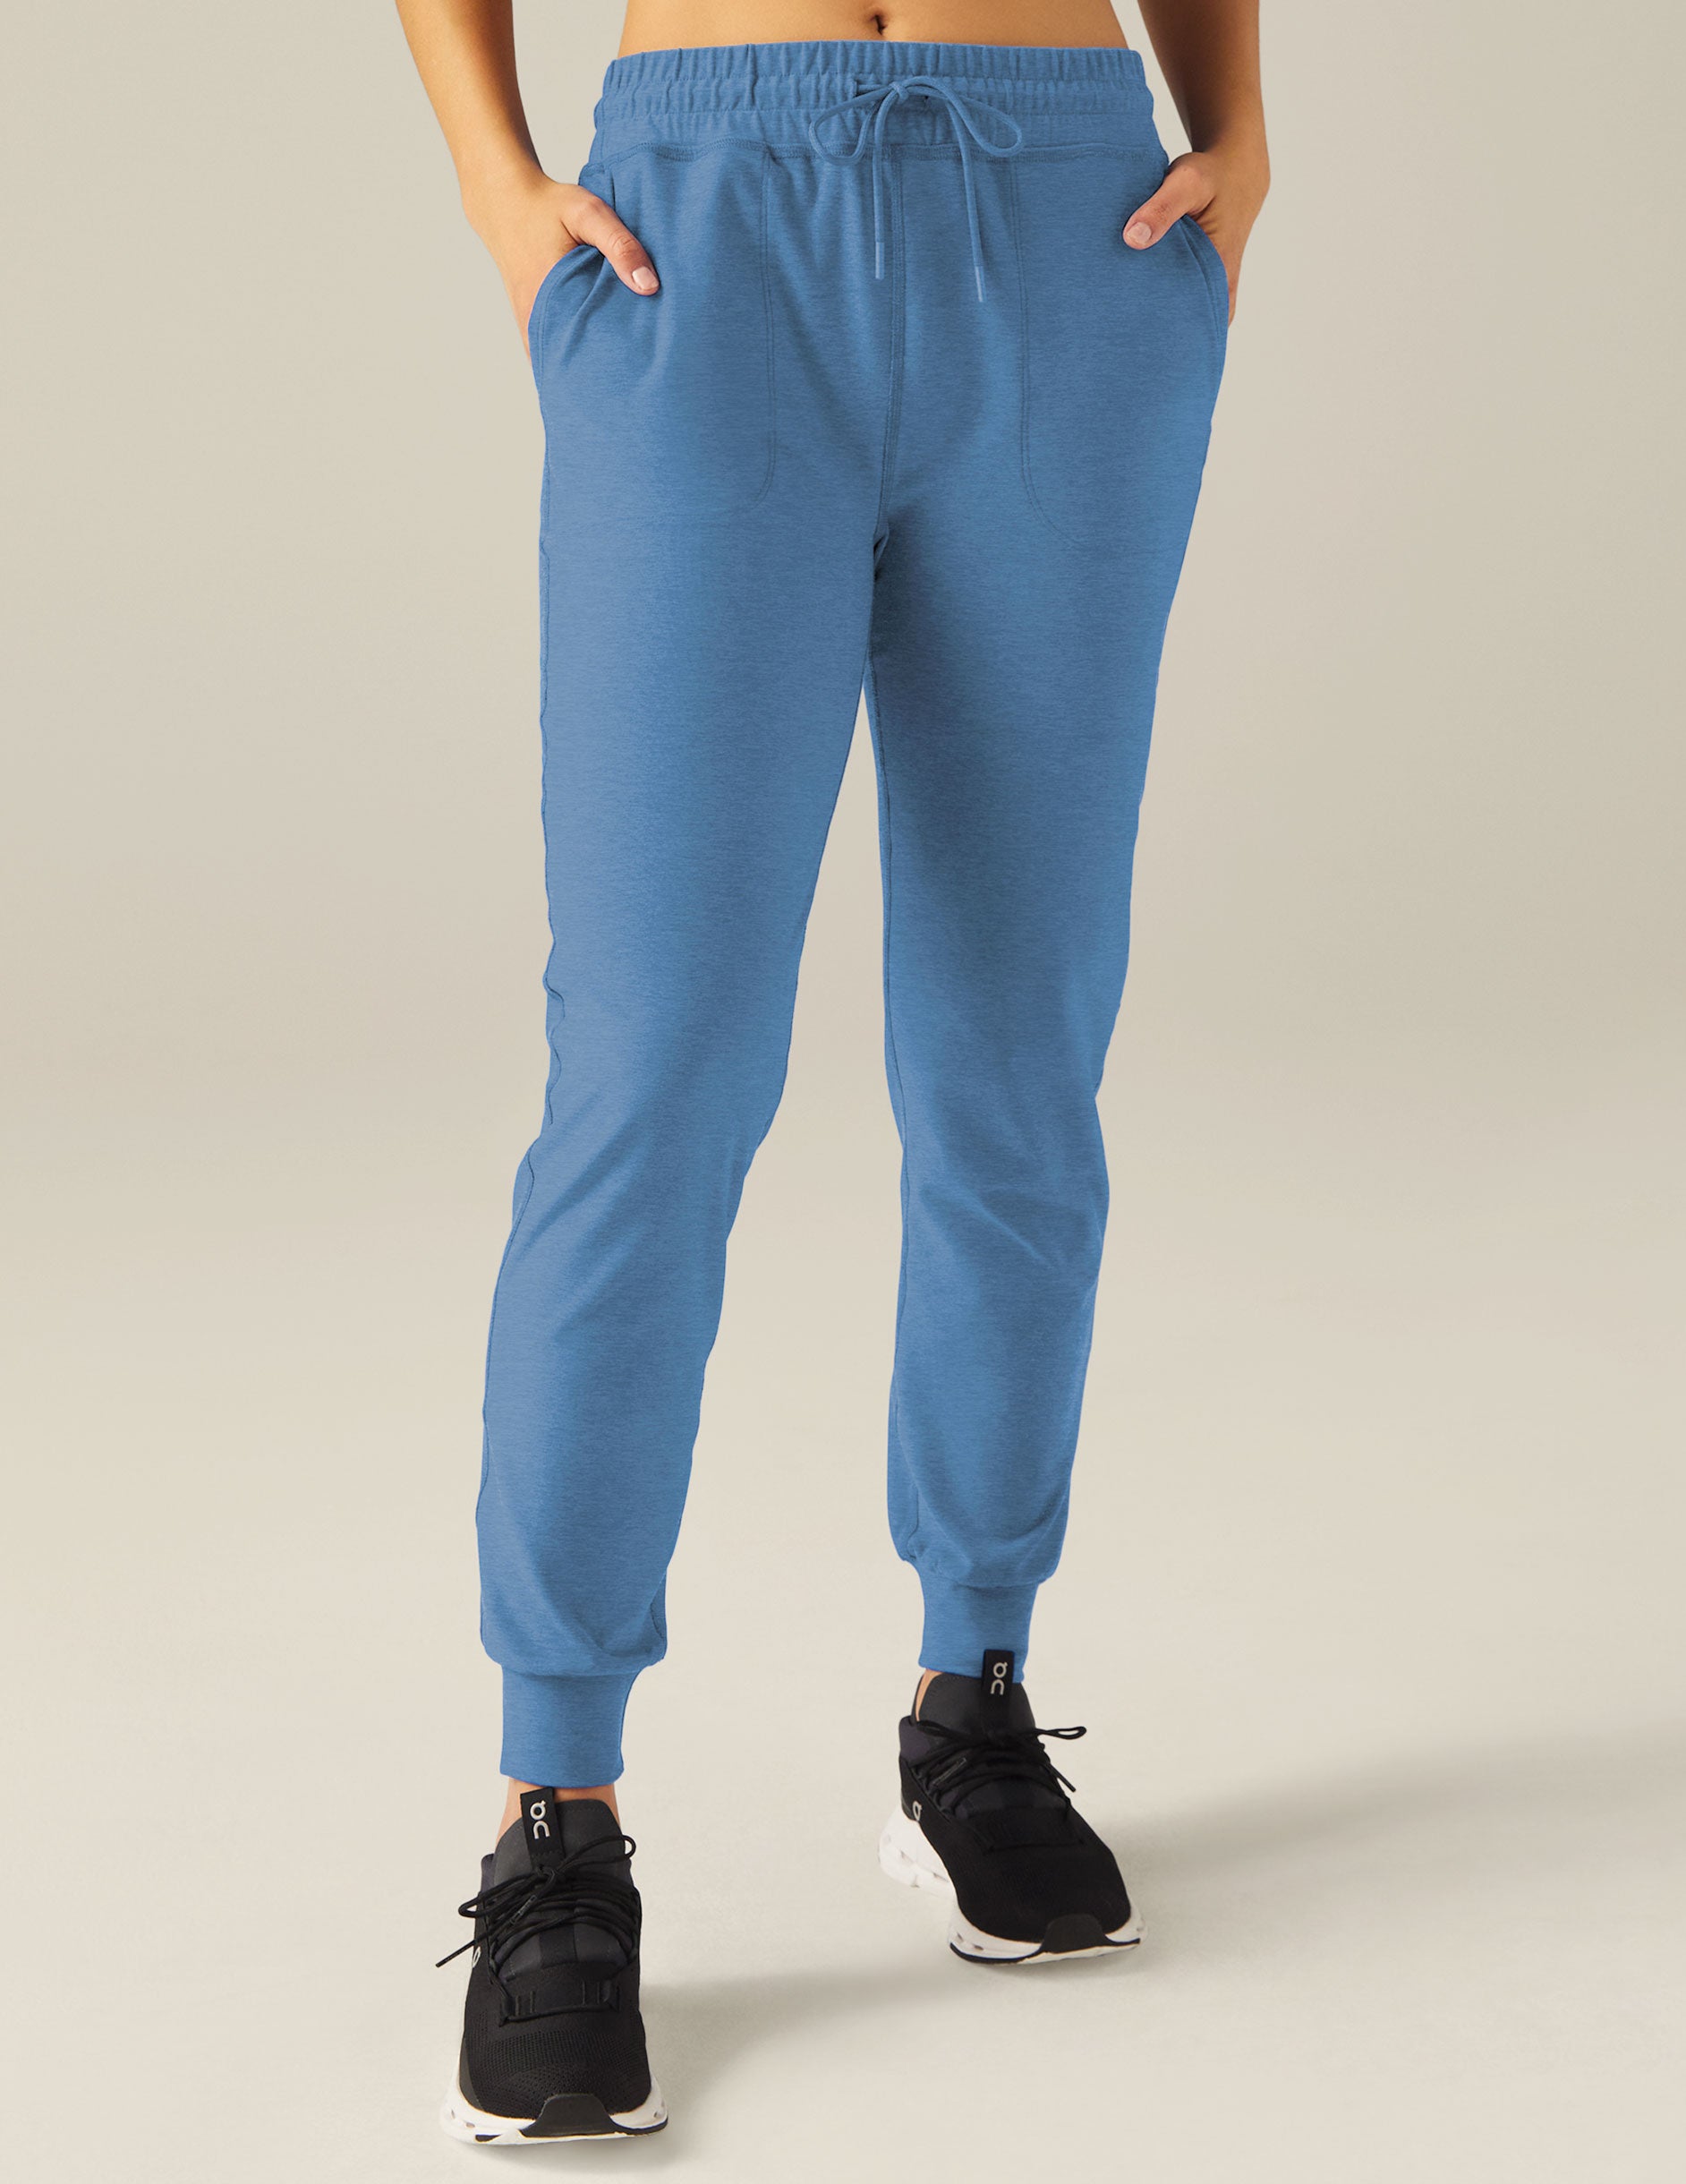 blue jogger pants with a drawstring at waistband. 